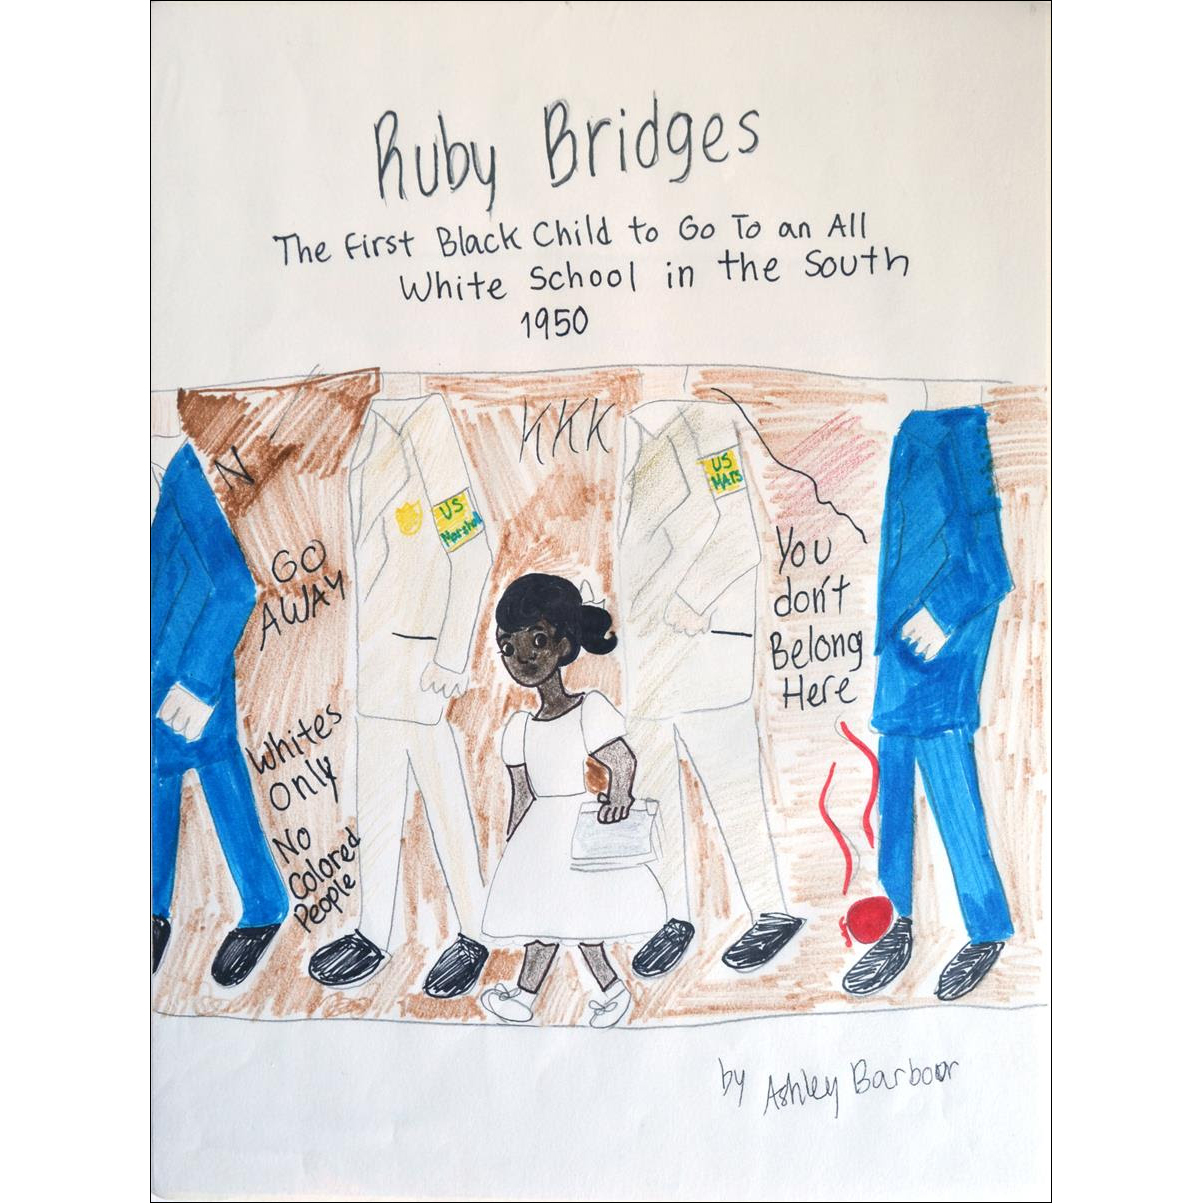 Ruby Bridges by Ashley Barbour.